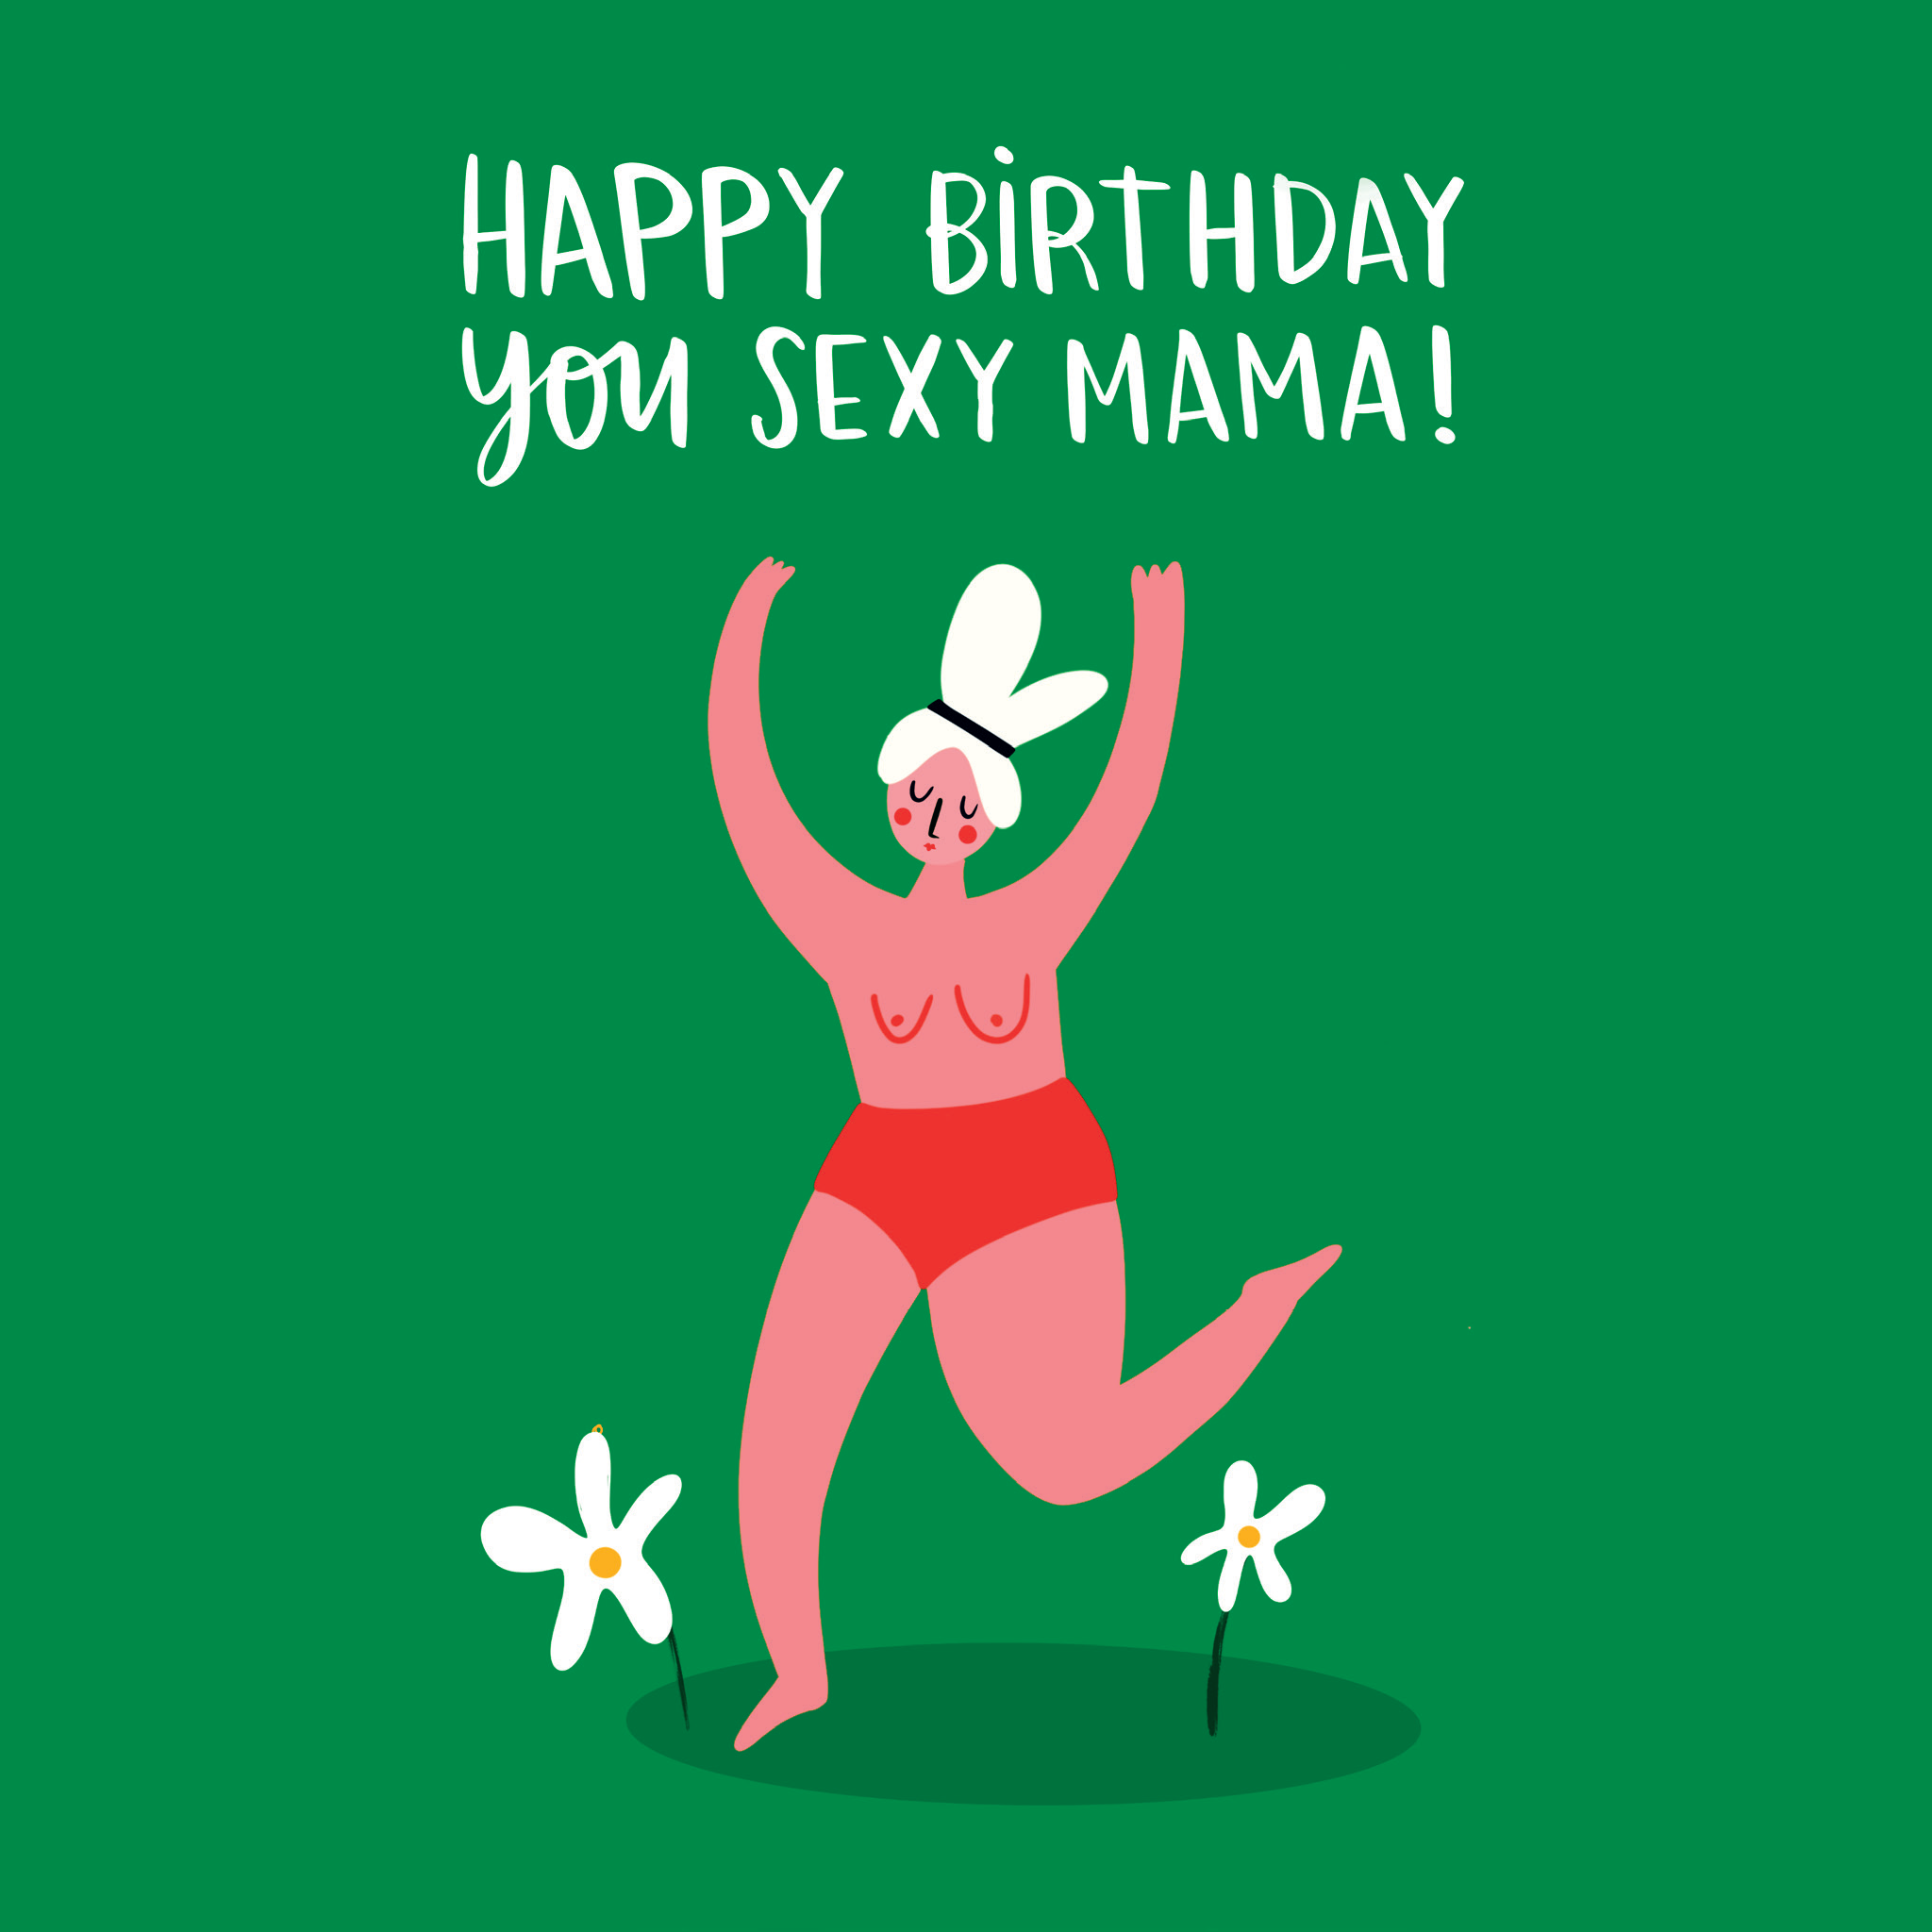 Sexy Mama Naked Lady Birthday Card Boomf